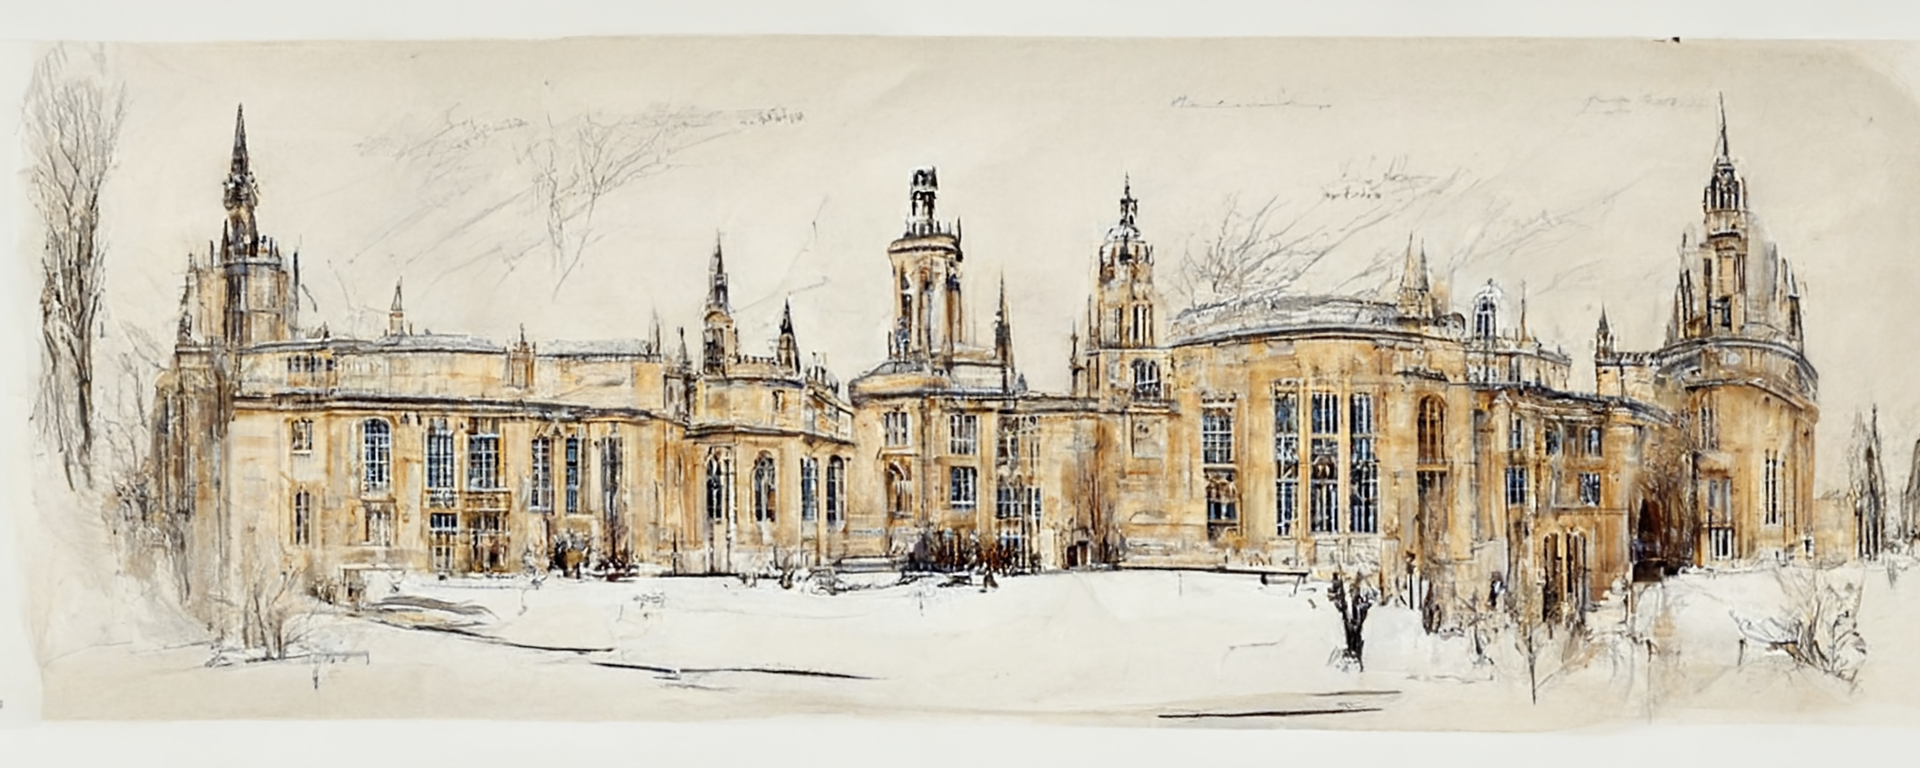 artist's sketch of a university